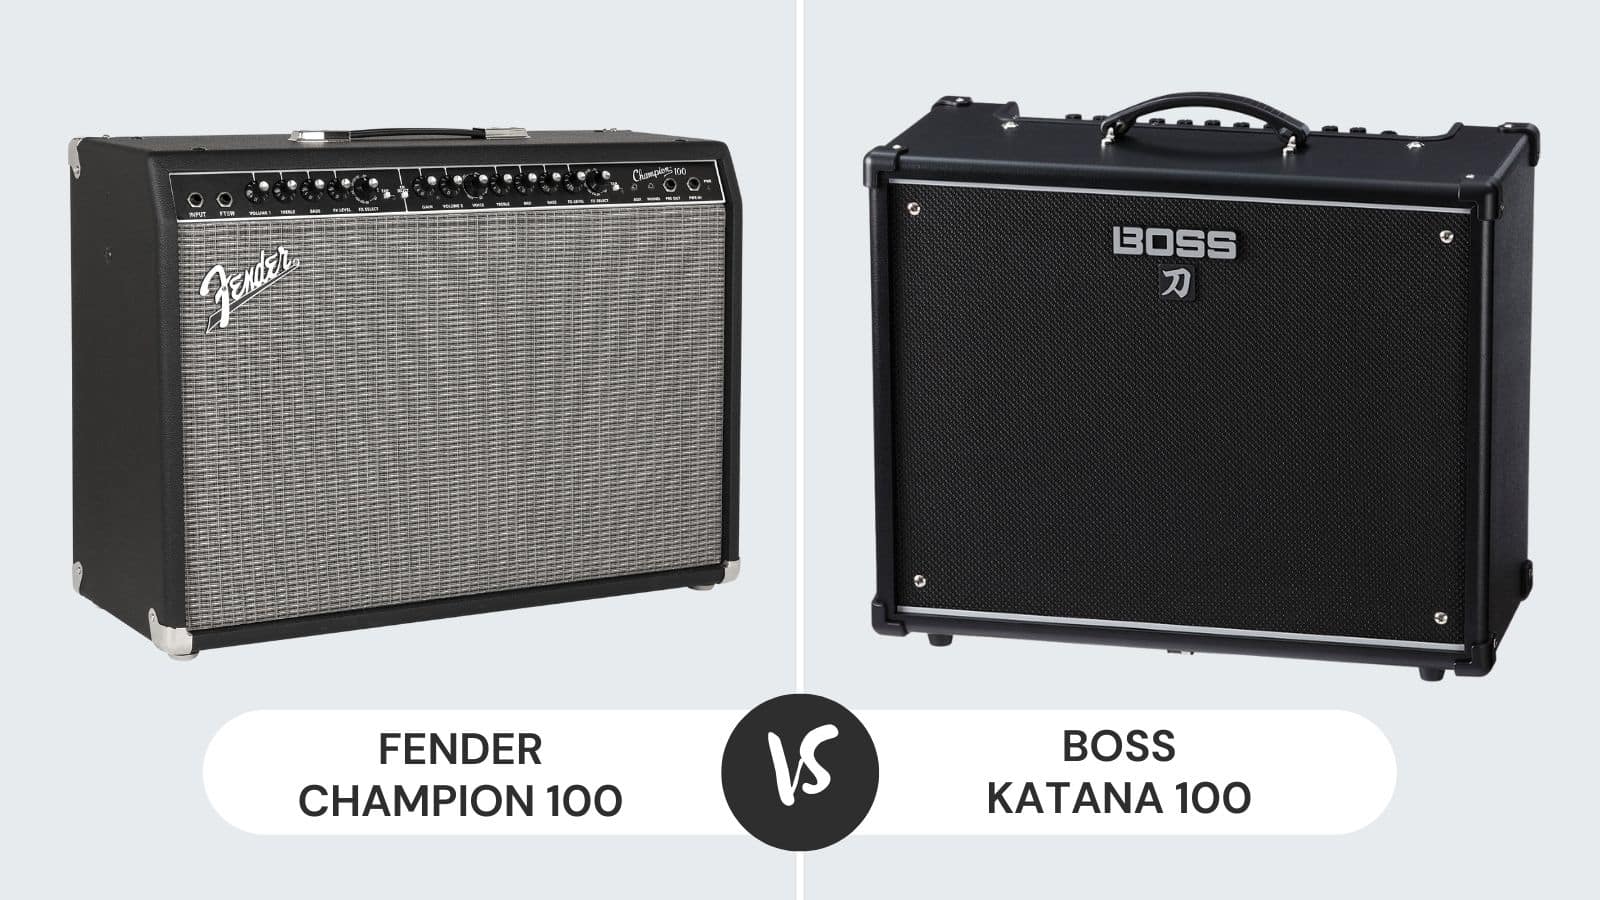 Fender Champion 100 vs Boss Katana 100